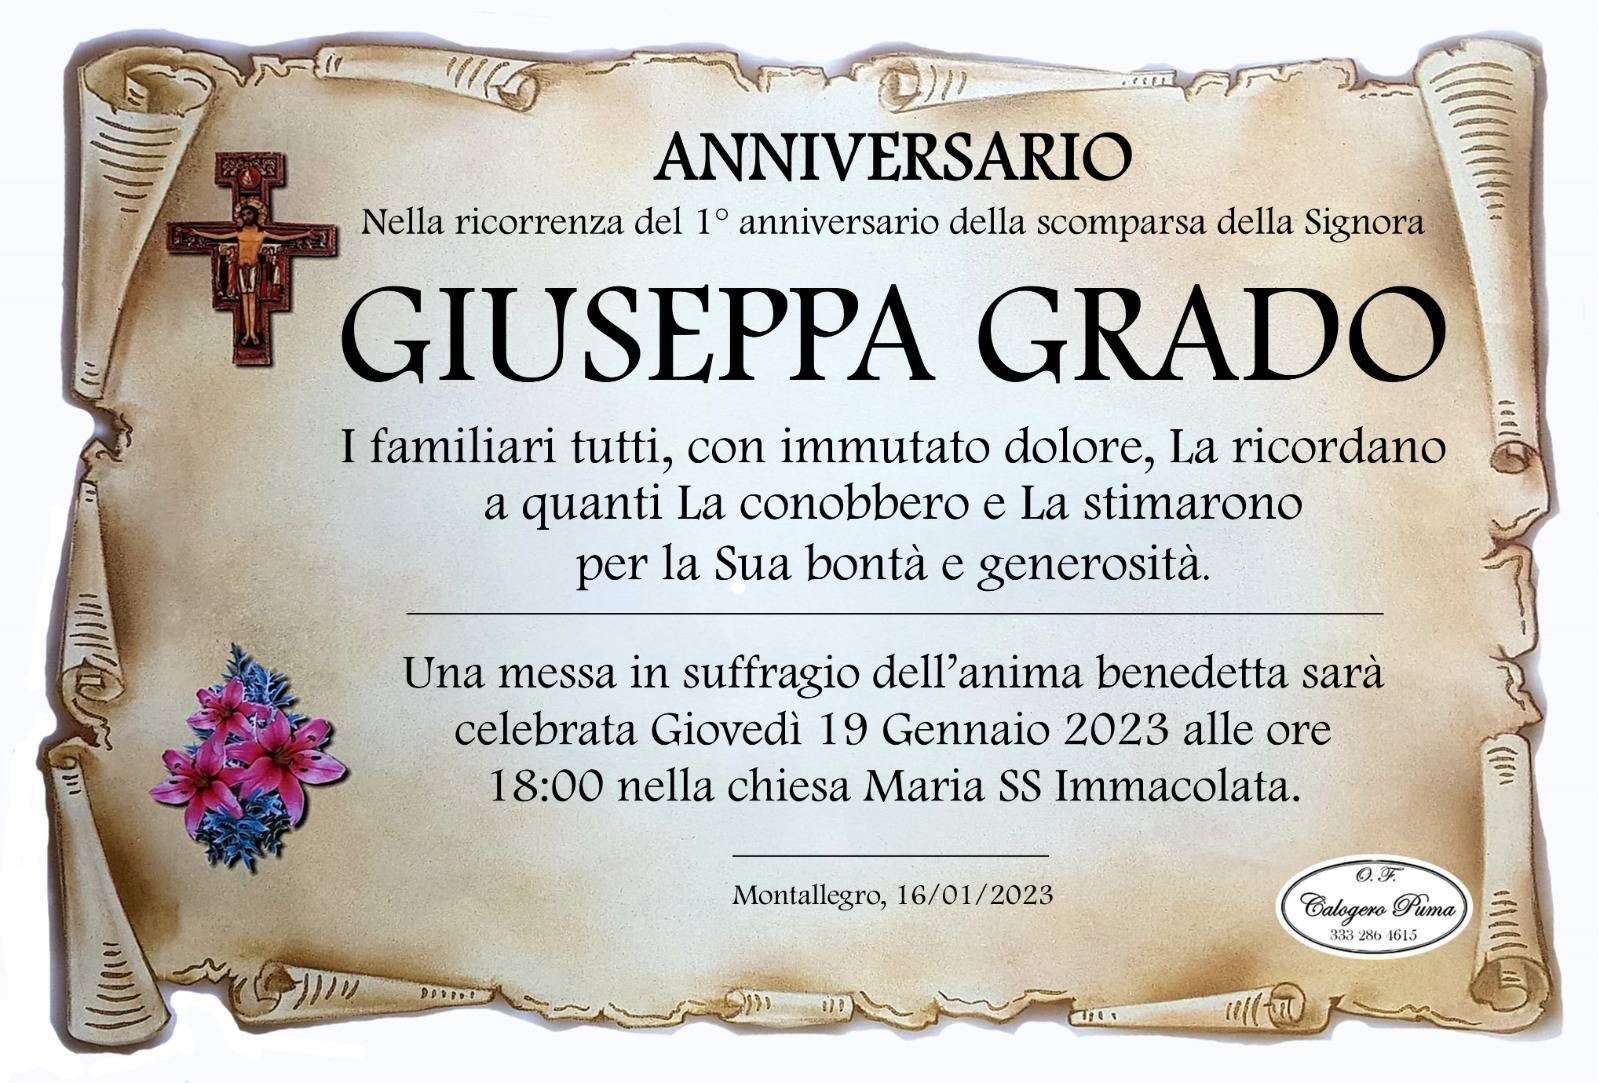 Giuseppa Grado